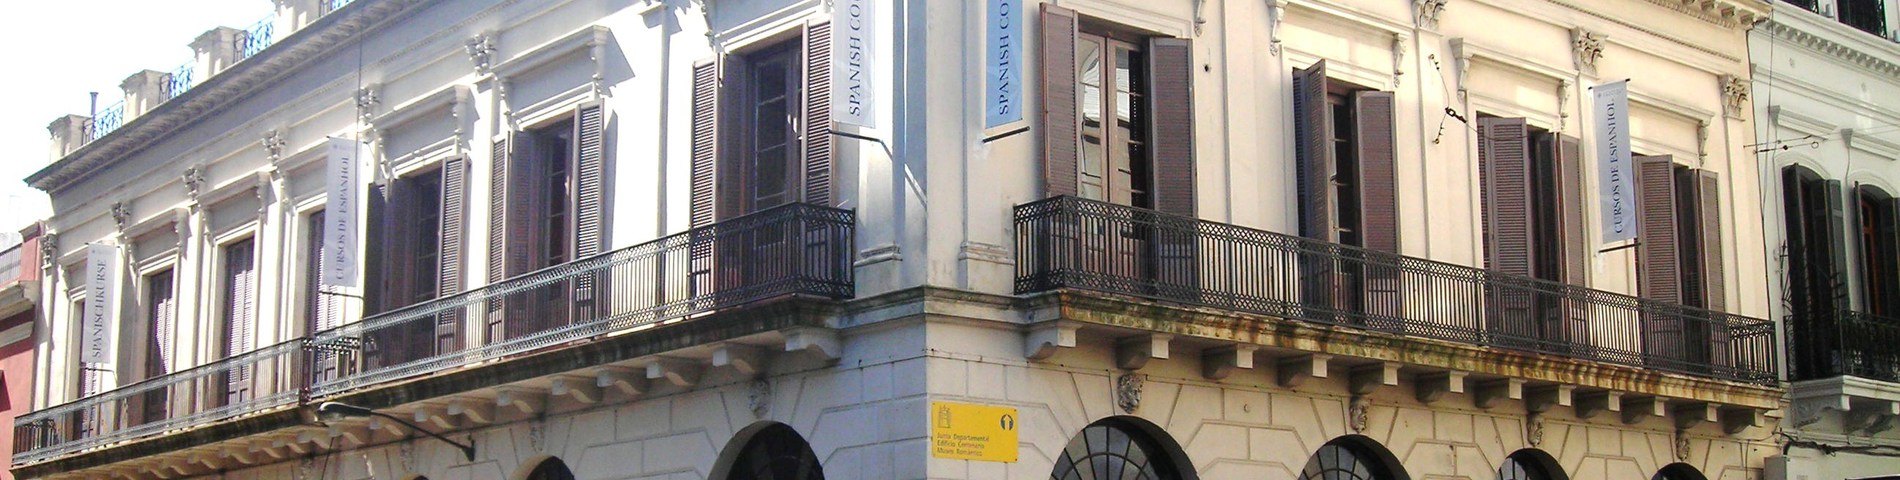 Academia Uruguay immagine 1